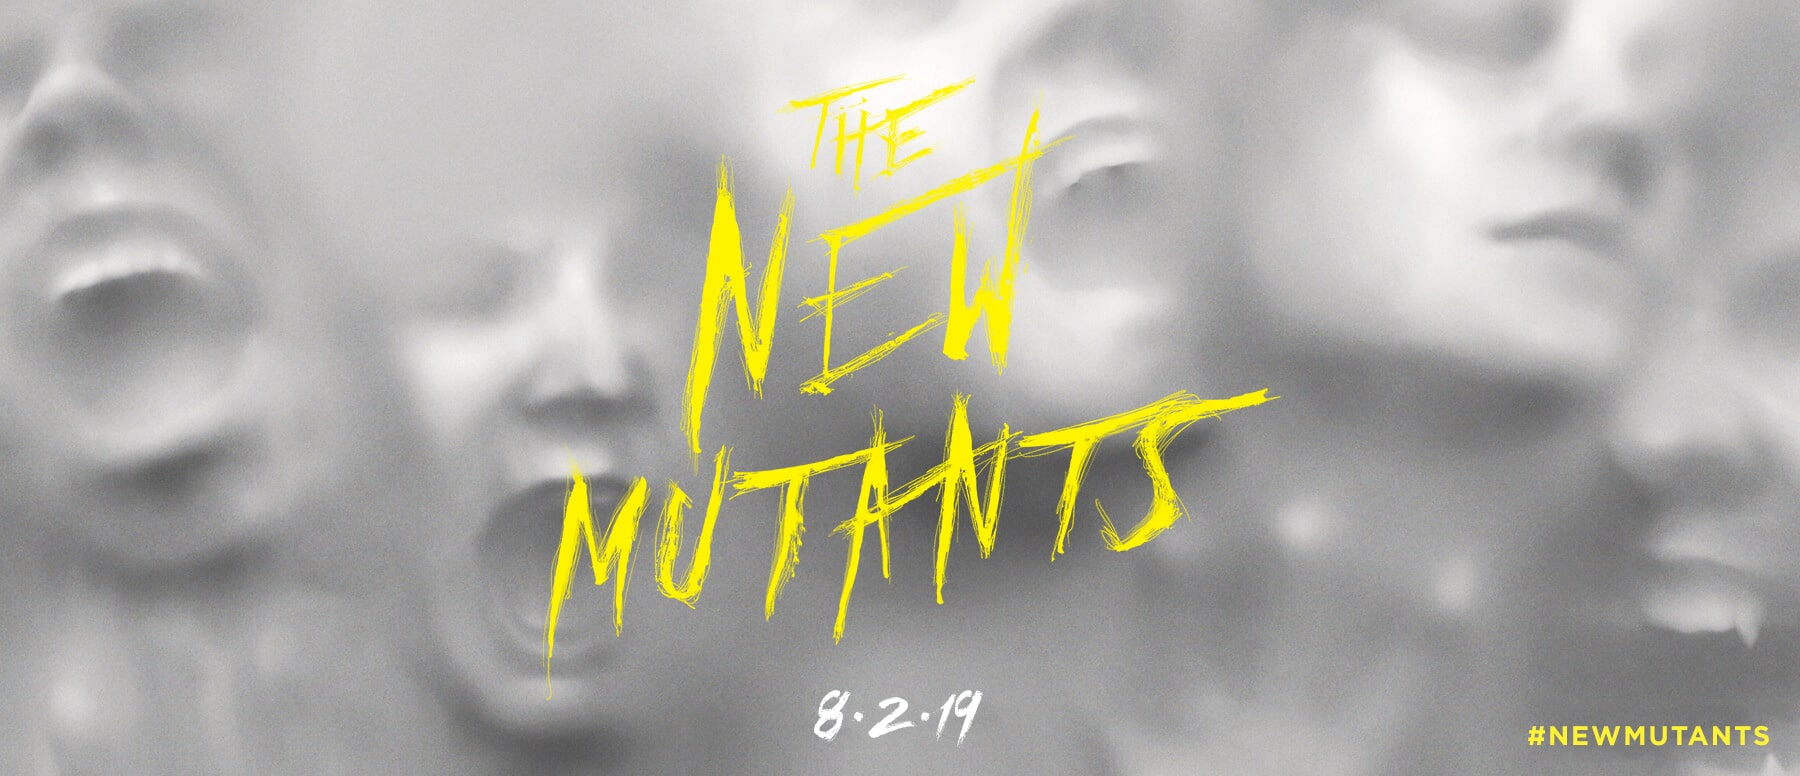 The New Mutants HD Wallpaper 7wallpaper